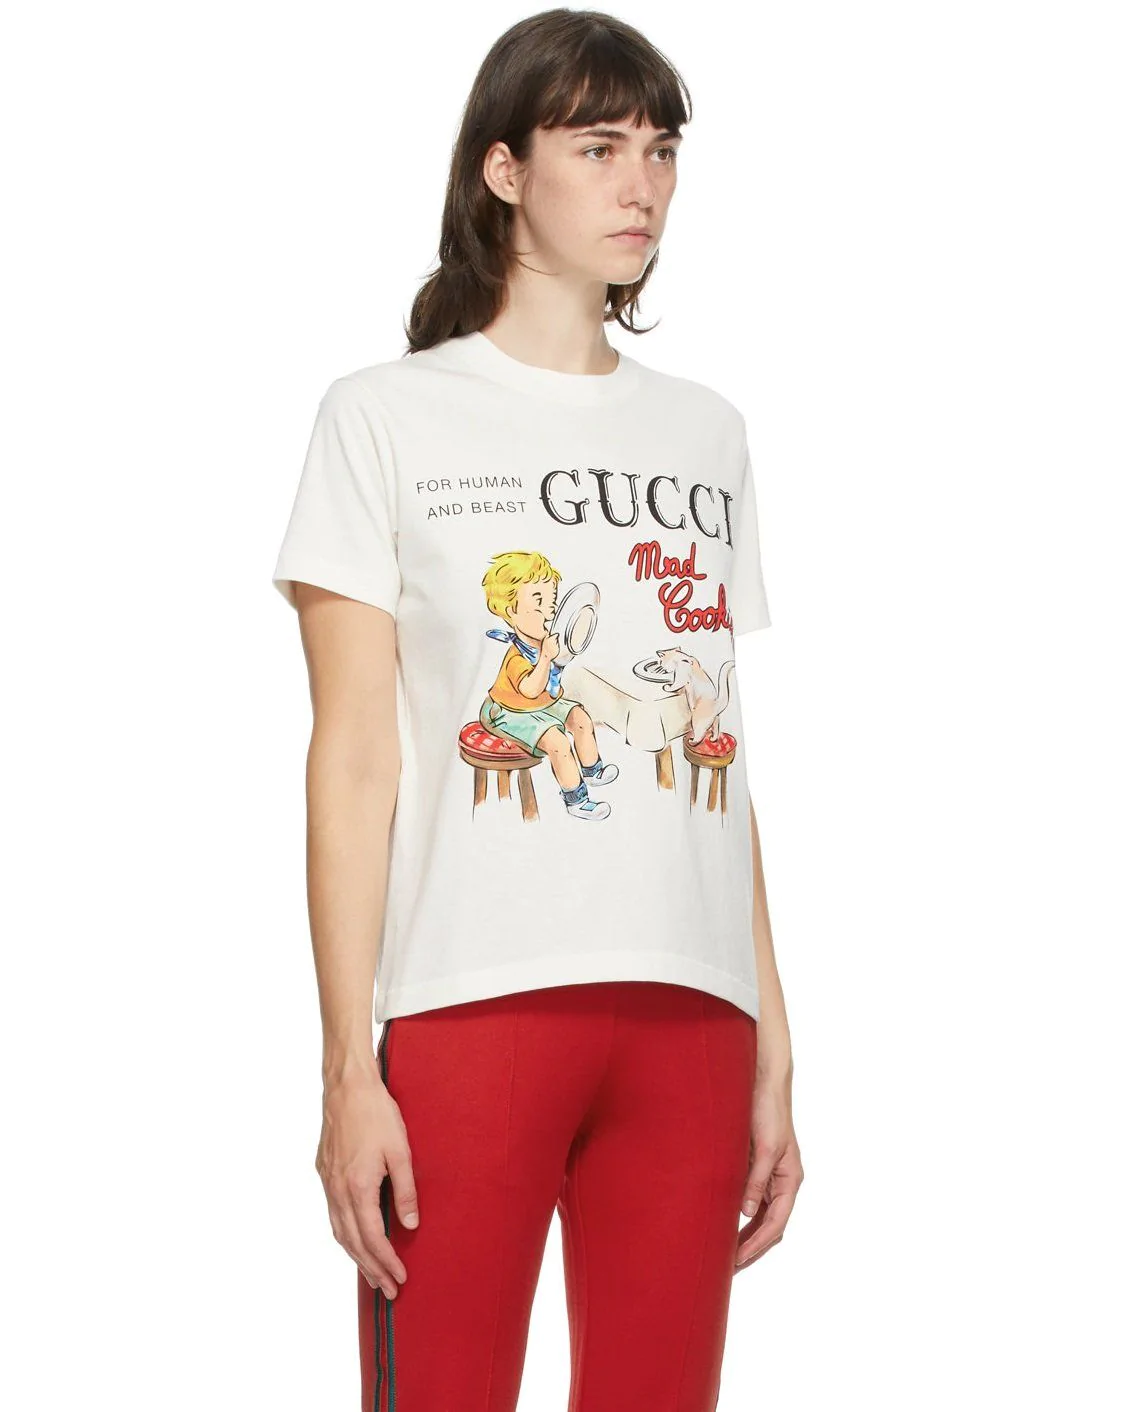 Gucci x 'Mad Cookies' T-Shirt